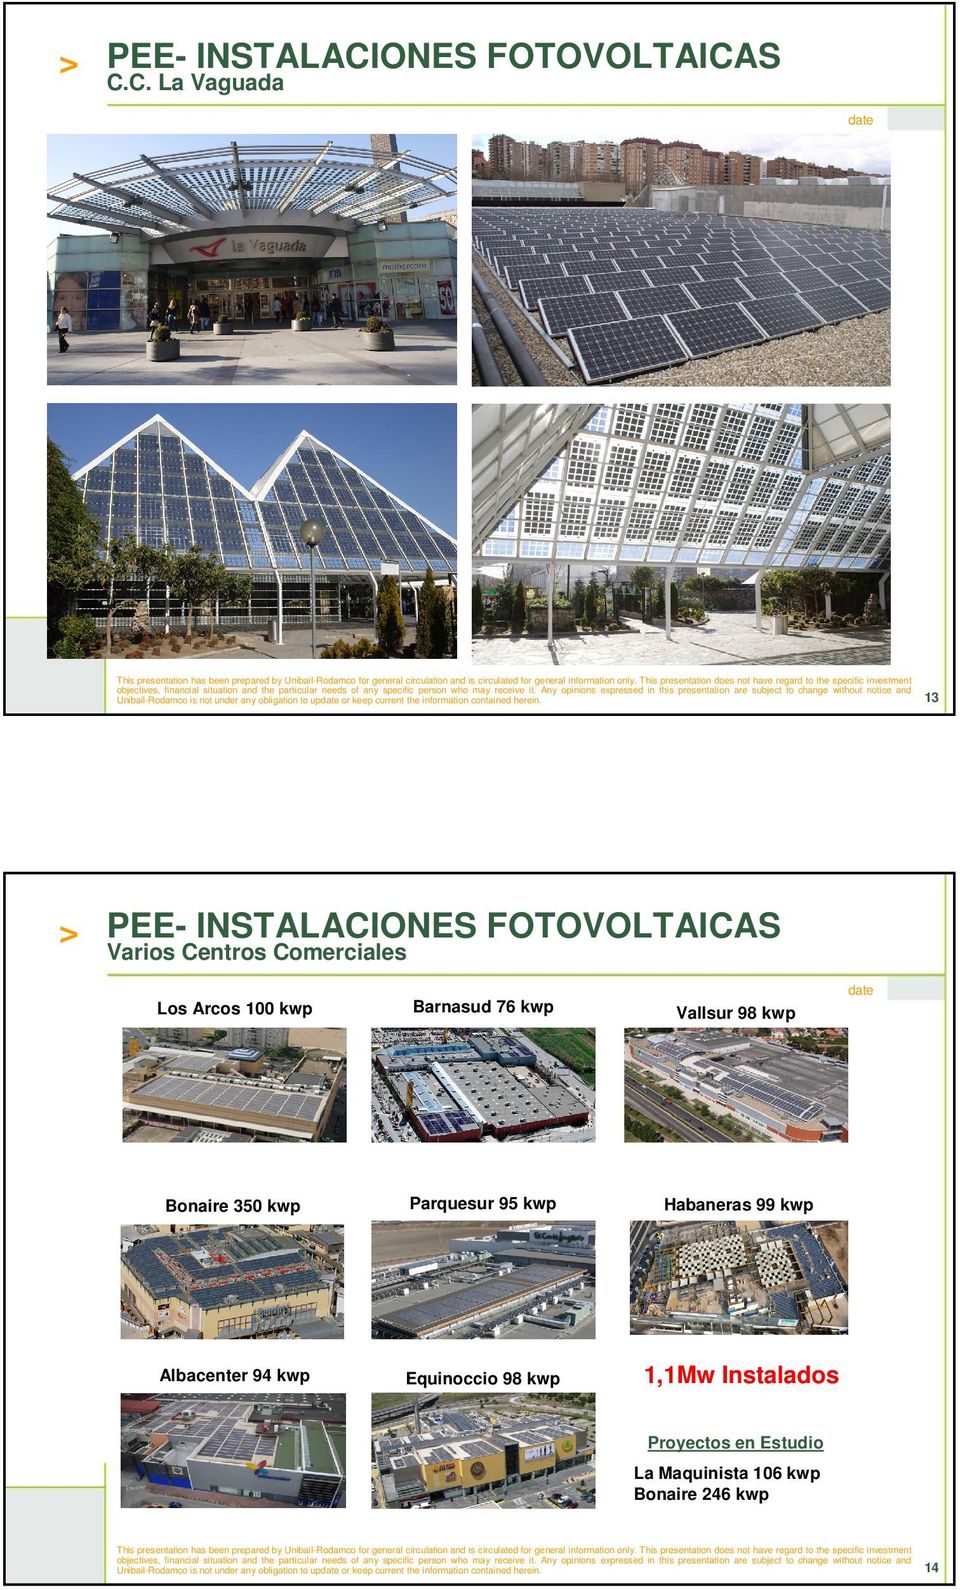 Parquesur 95 kwp Habaneras 99 kwp Albacenter 94 kwp Equinoccio 98 kwp 1,1Mw Instalados Proyectos en Estudio La Maquinista 106 kwp